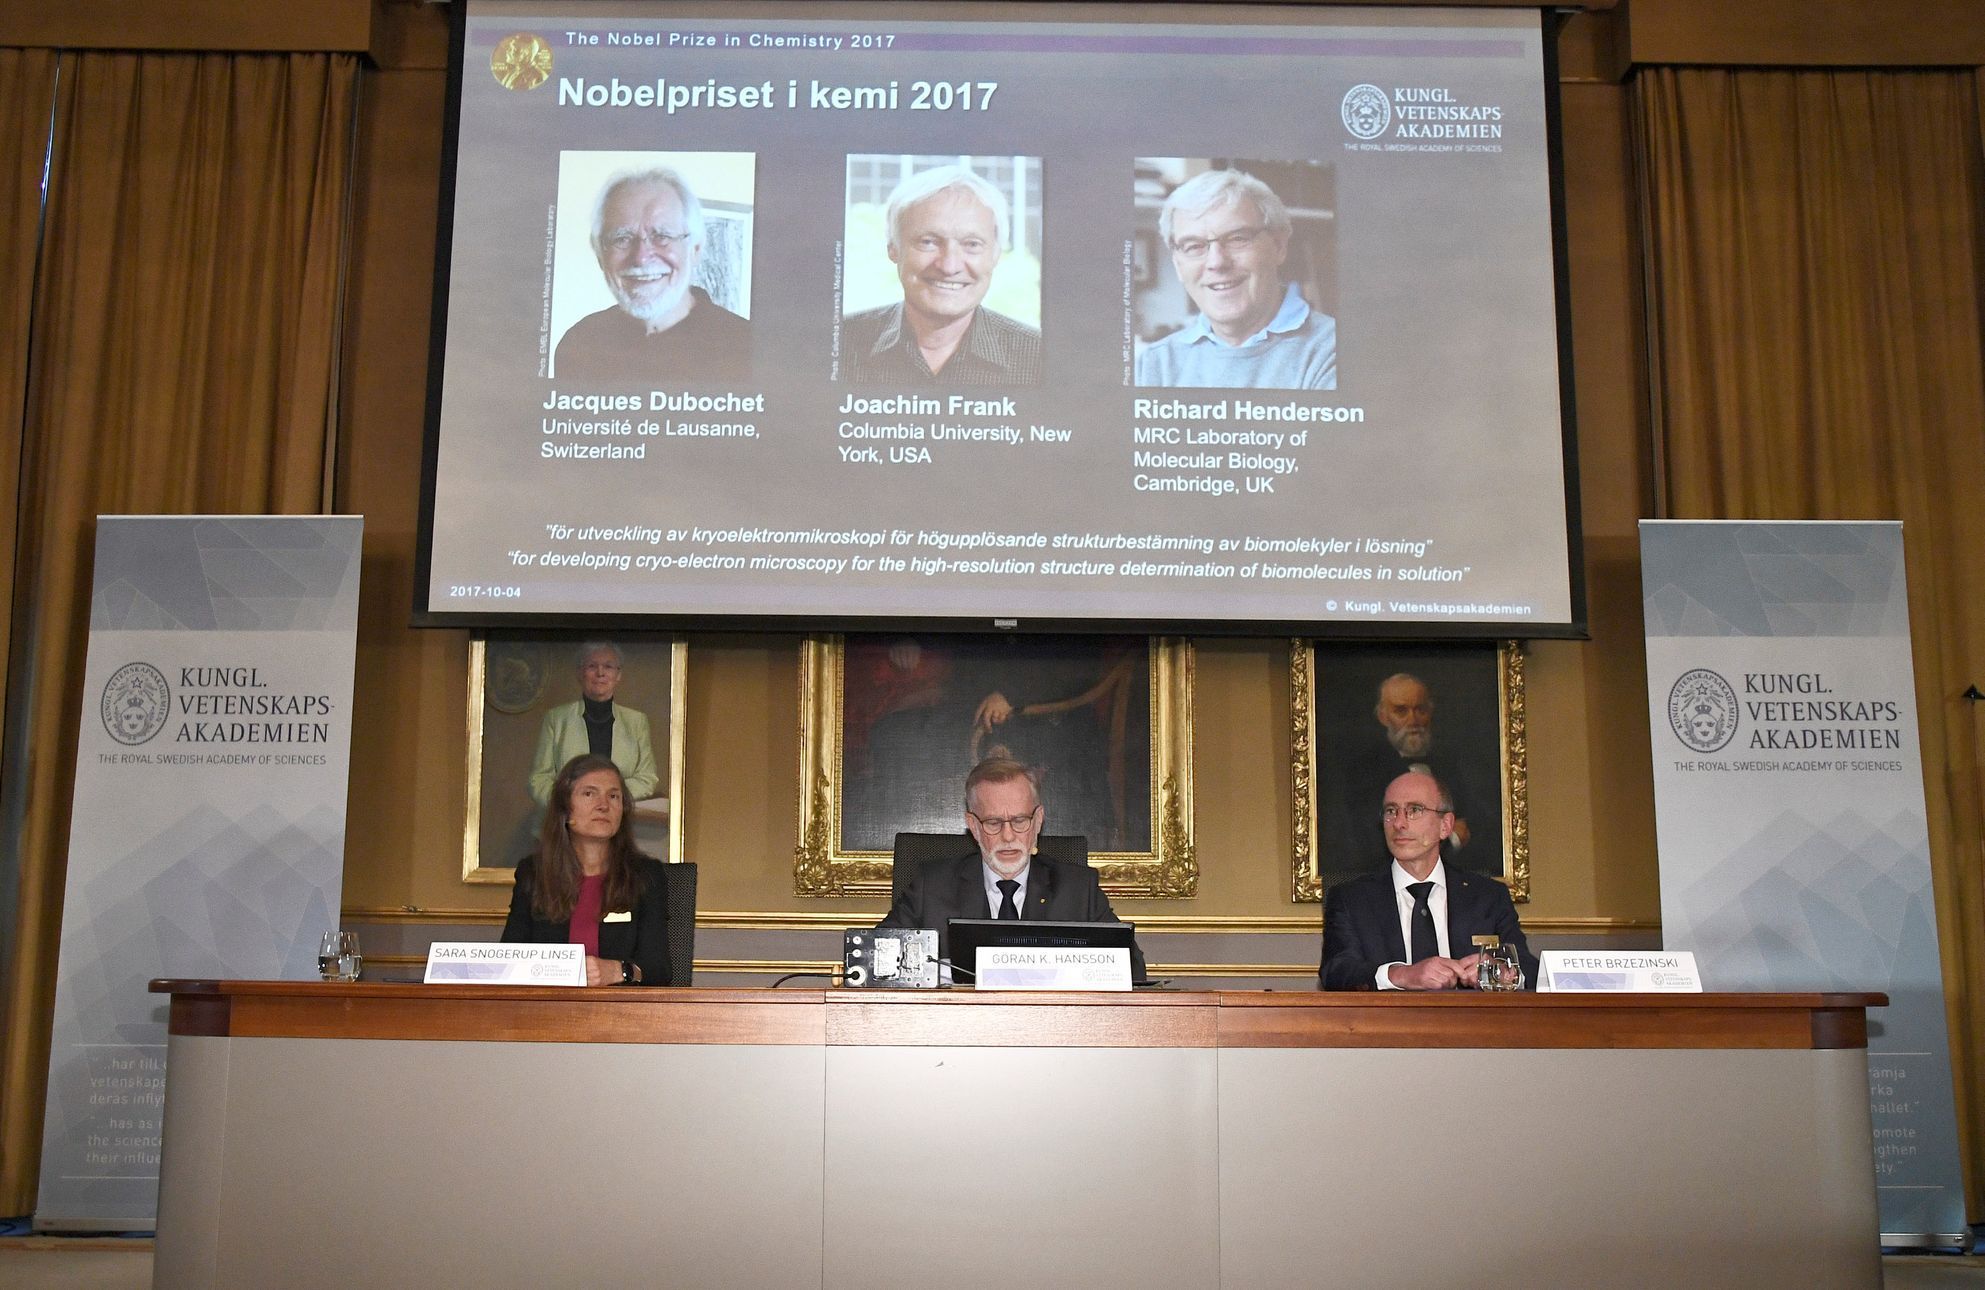 Nobelova cena za chemii 2017 - komise